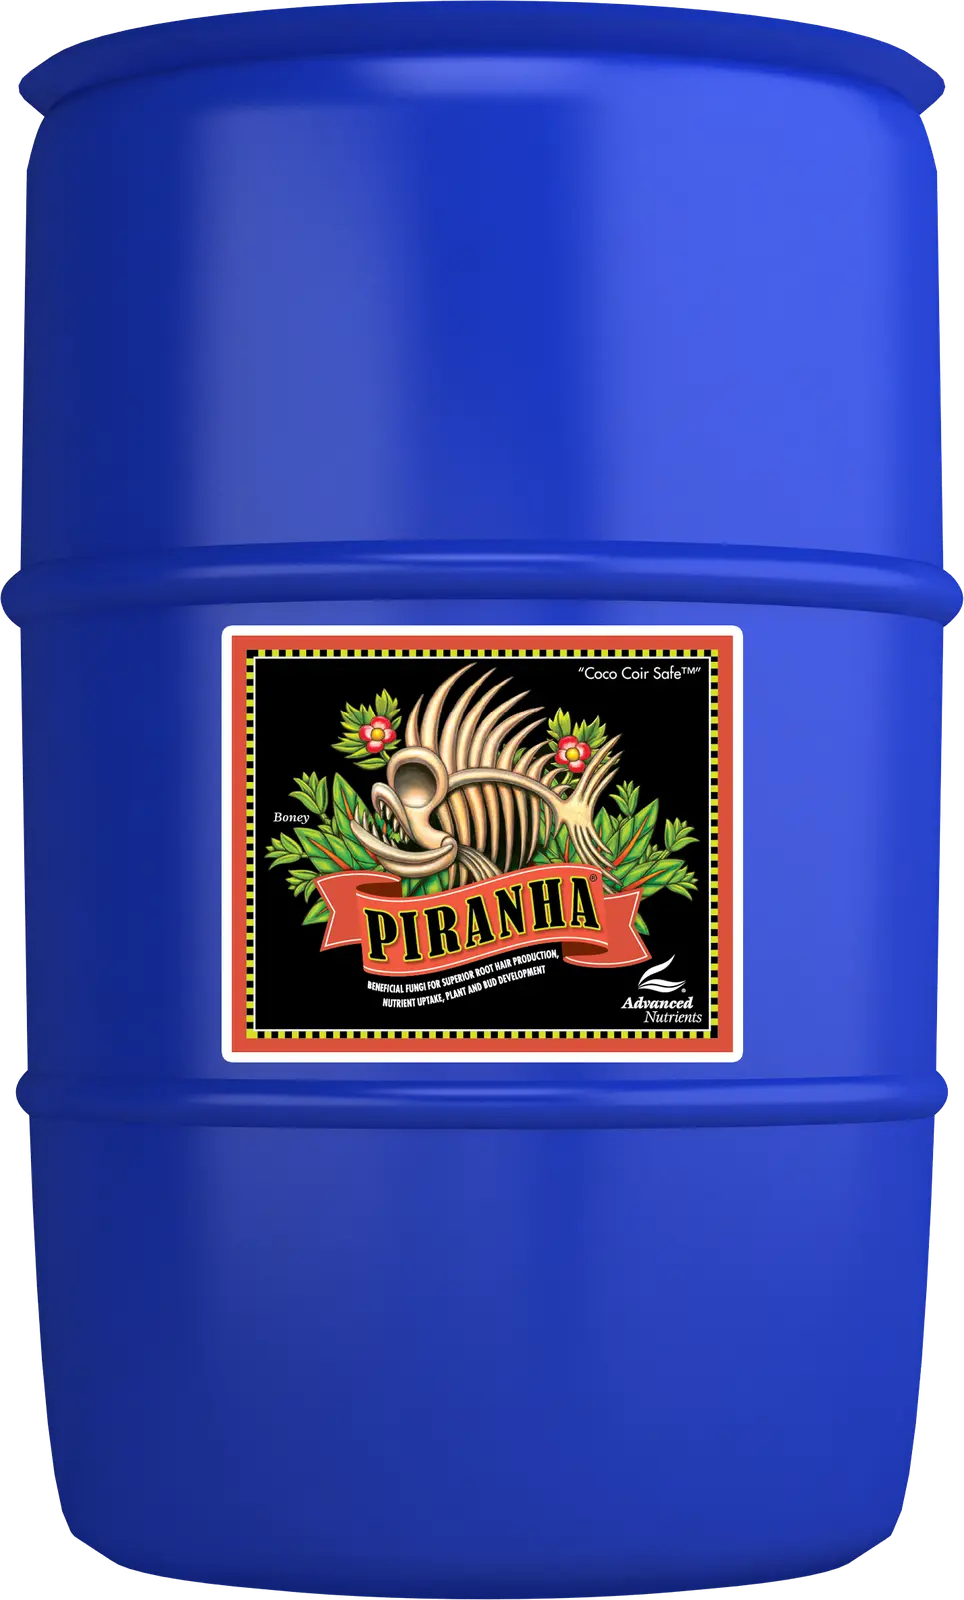 Advanced Nutrients Piranha Advanced Nutrients